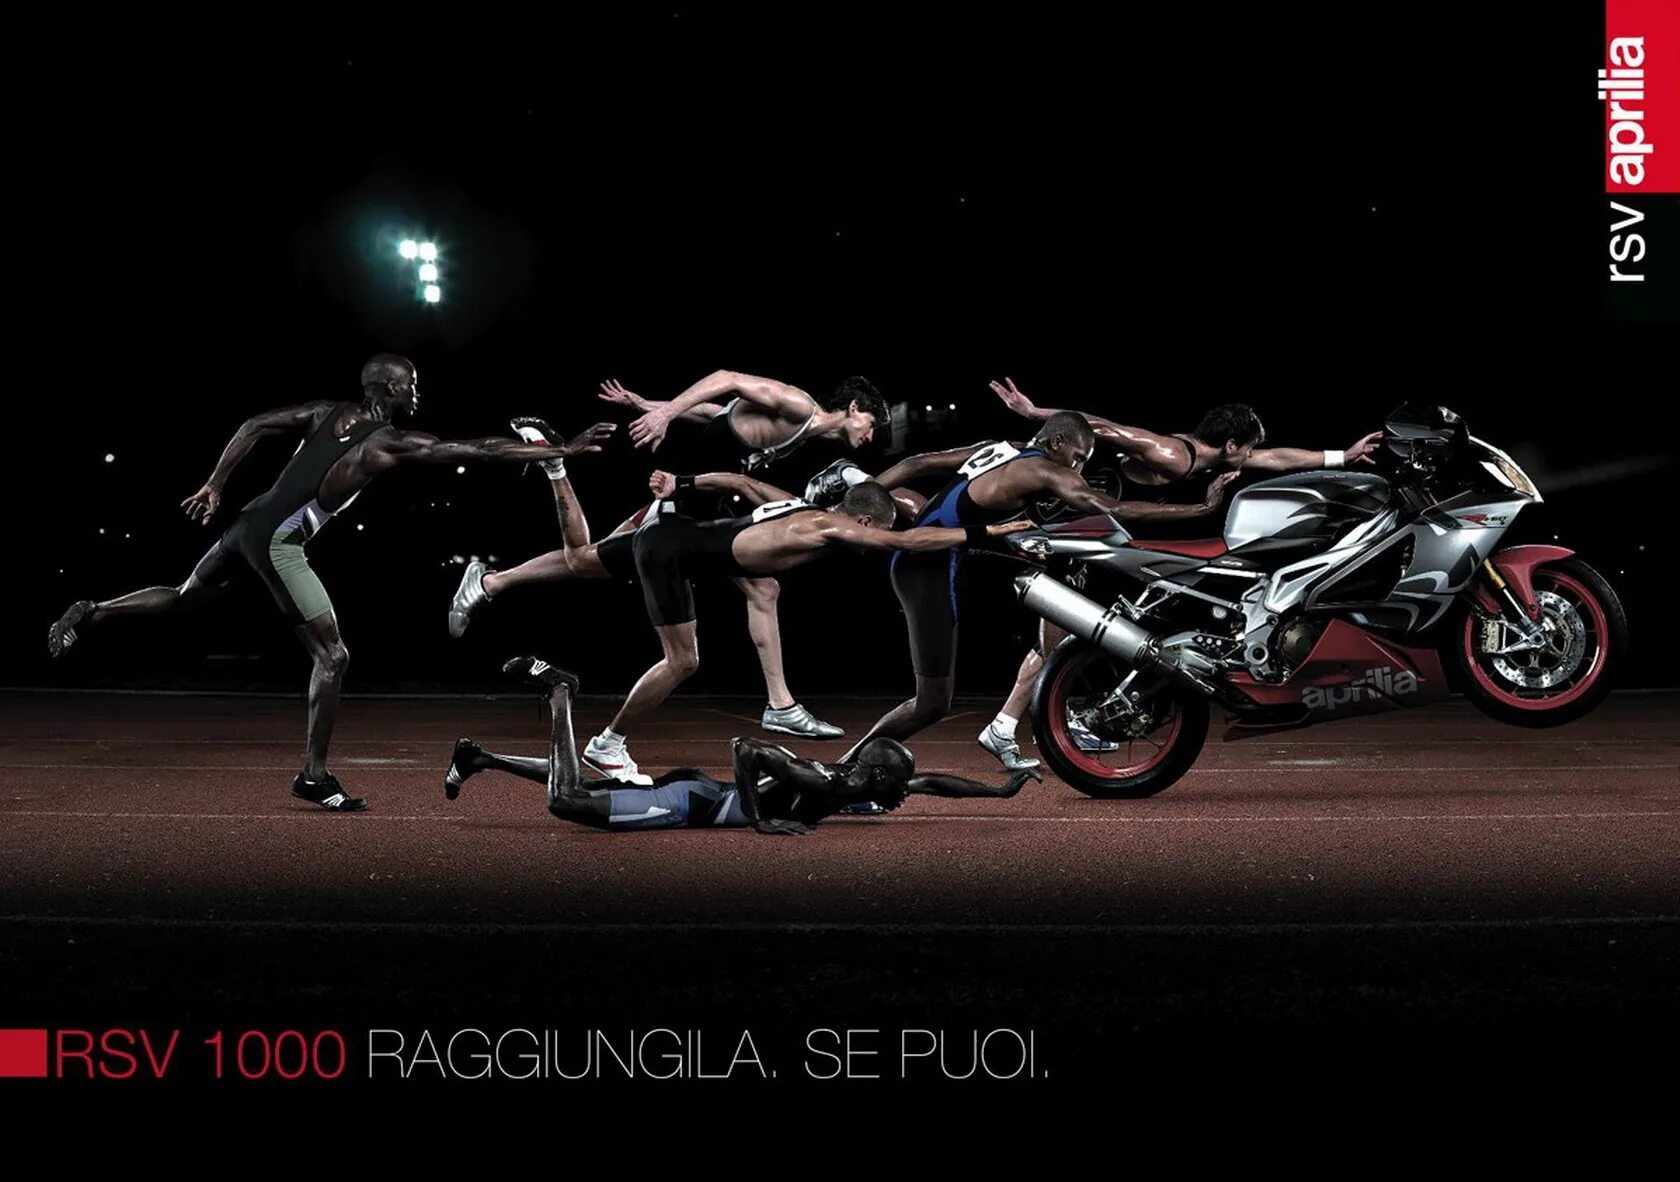 Реклама x6. Мото реклама. Лучшая реклама мотоцикла. Креативная реклама мото. Реклама КРУТЫХ мотоциклов.